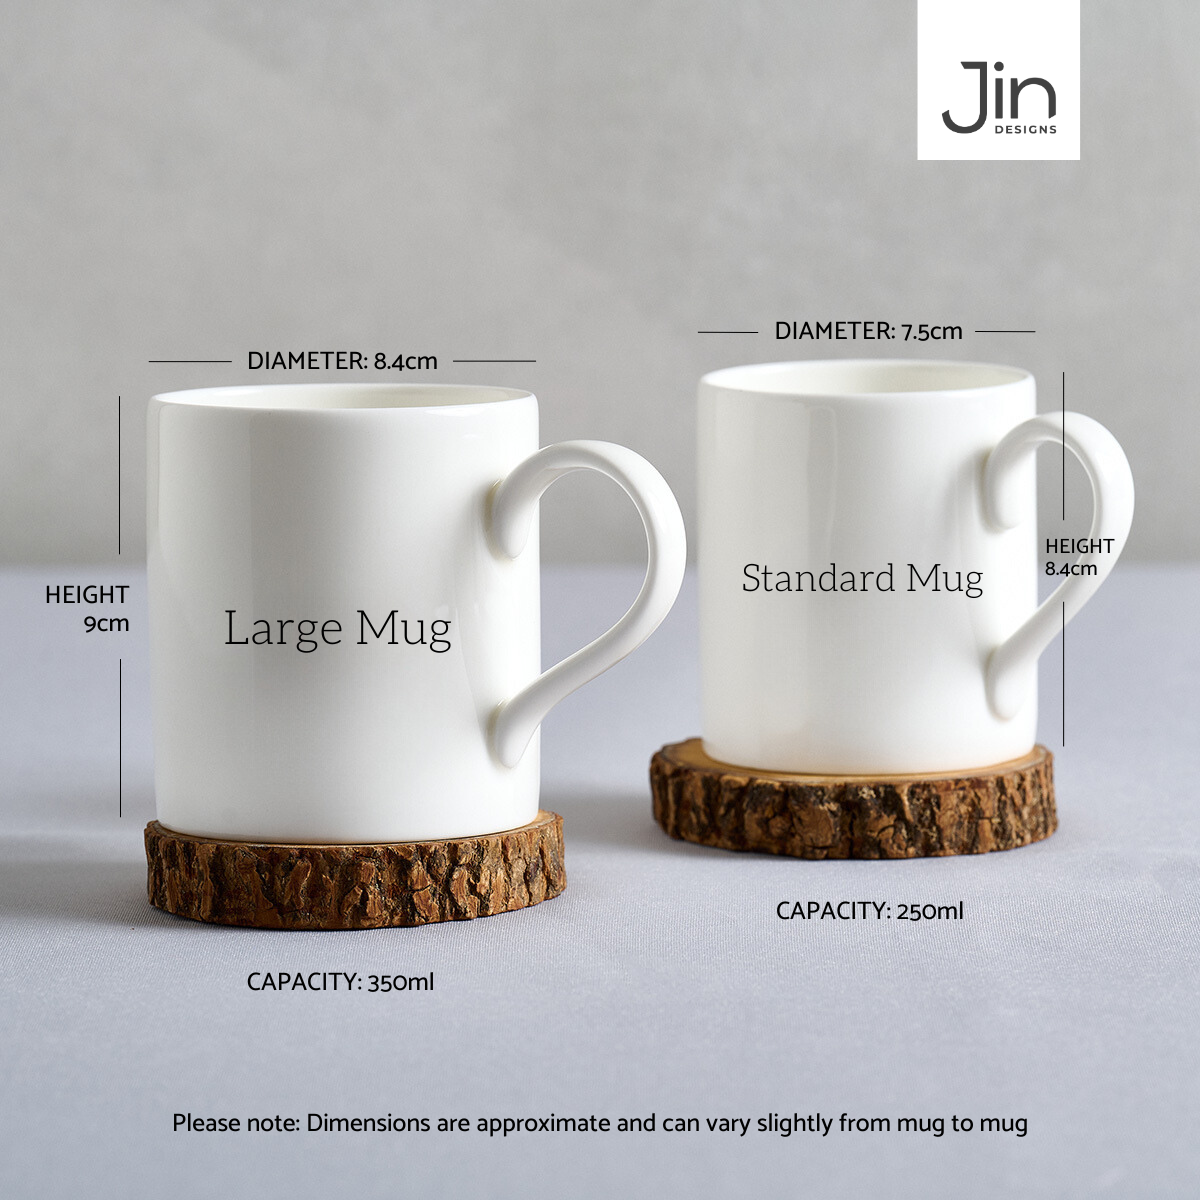 Jin Designs Large and Standard Mug Sizes